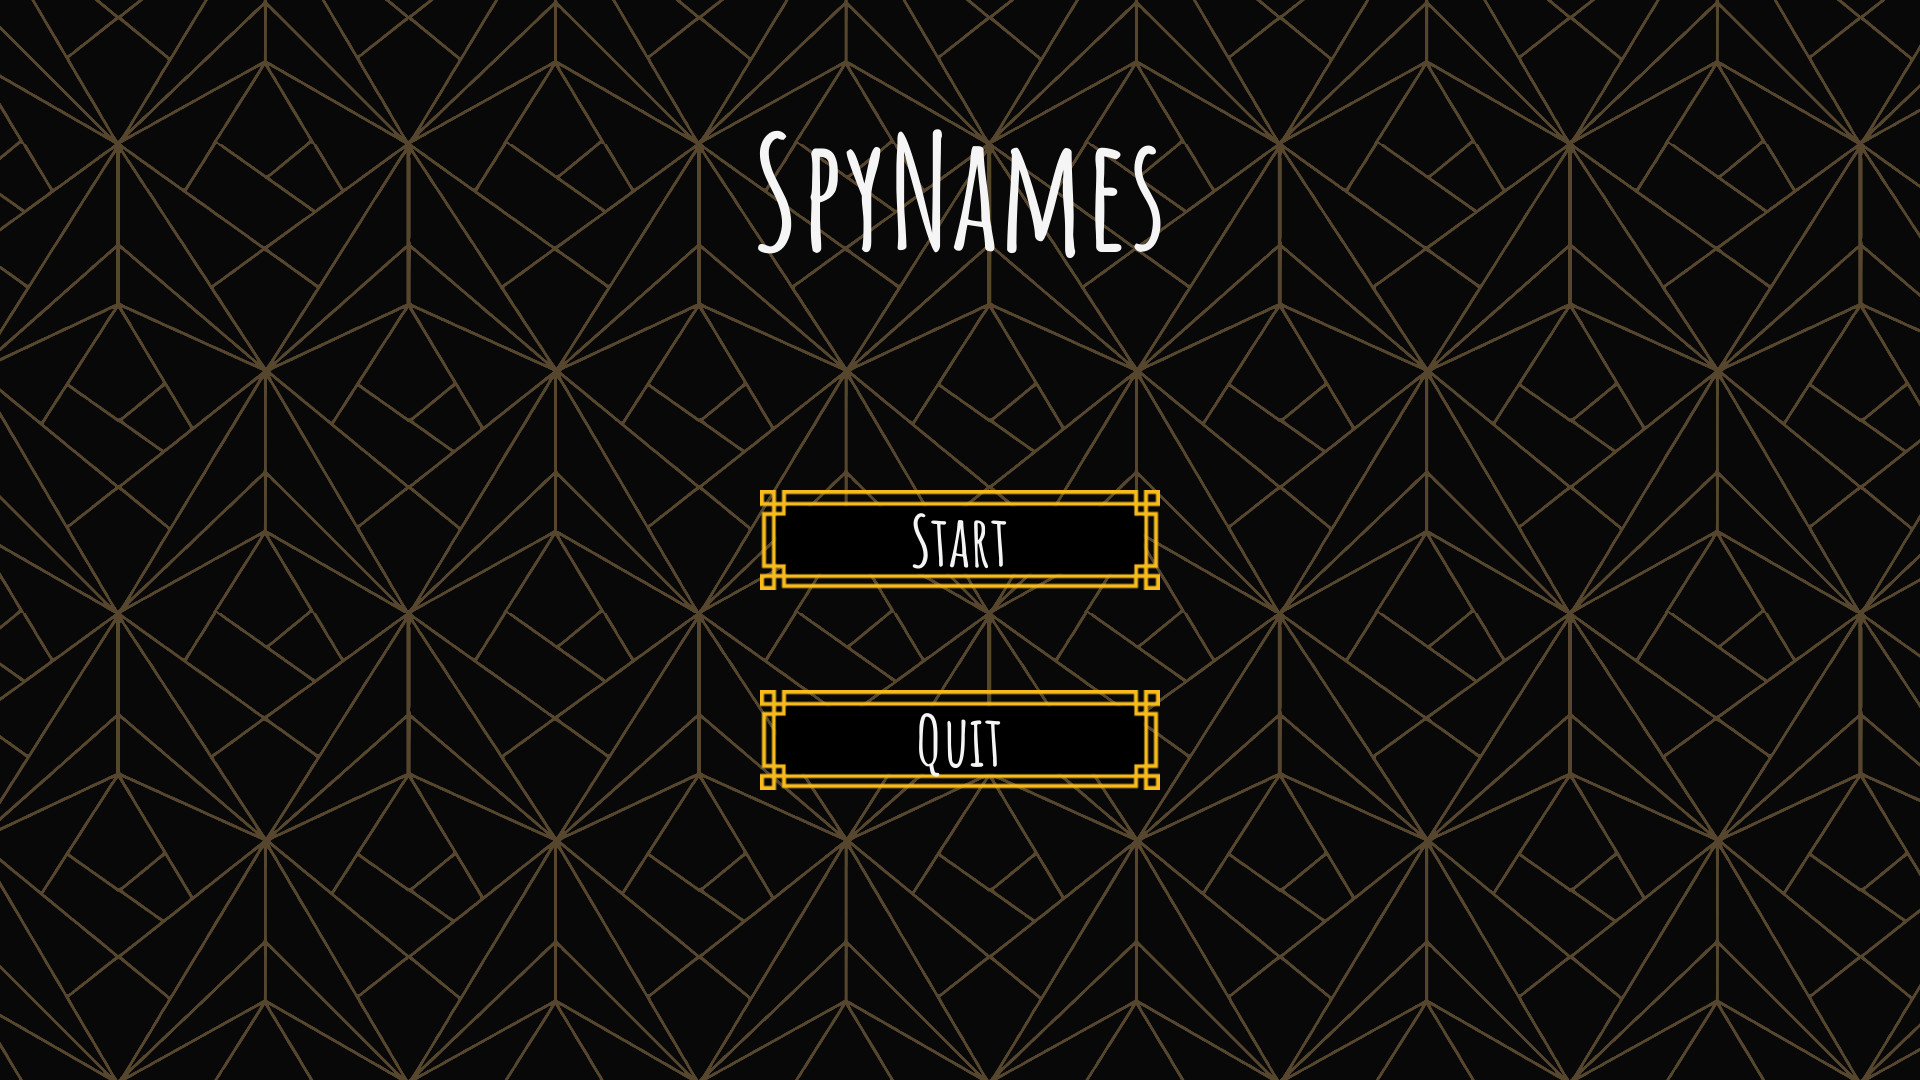 SpyNames screenshot